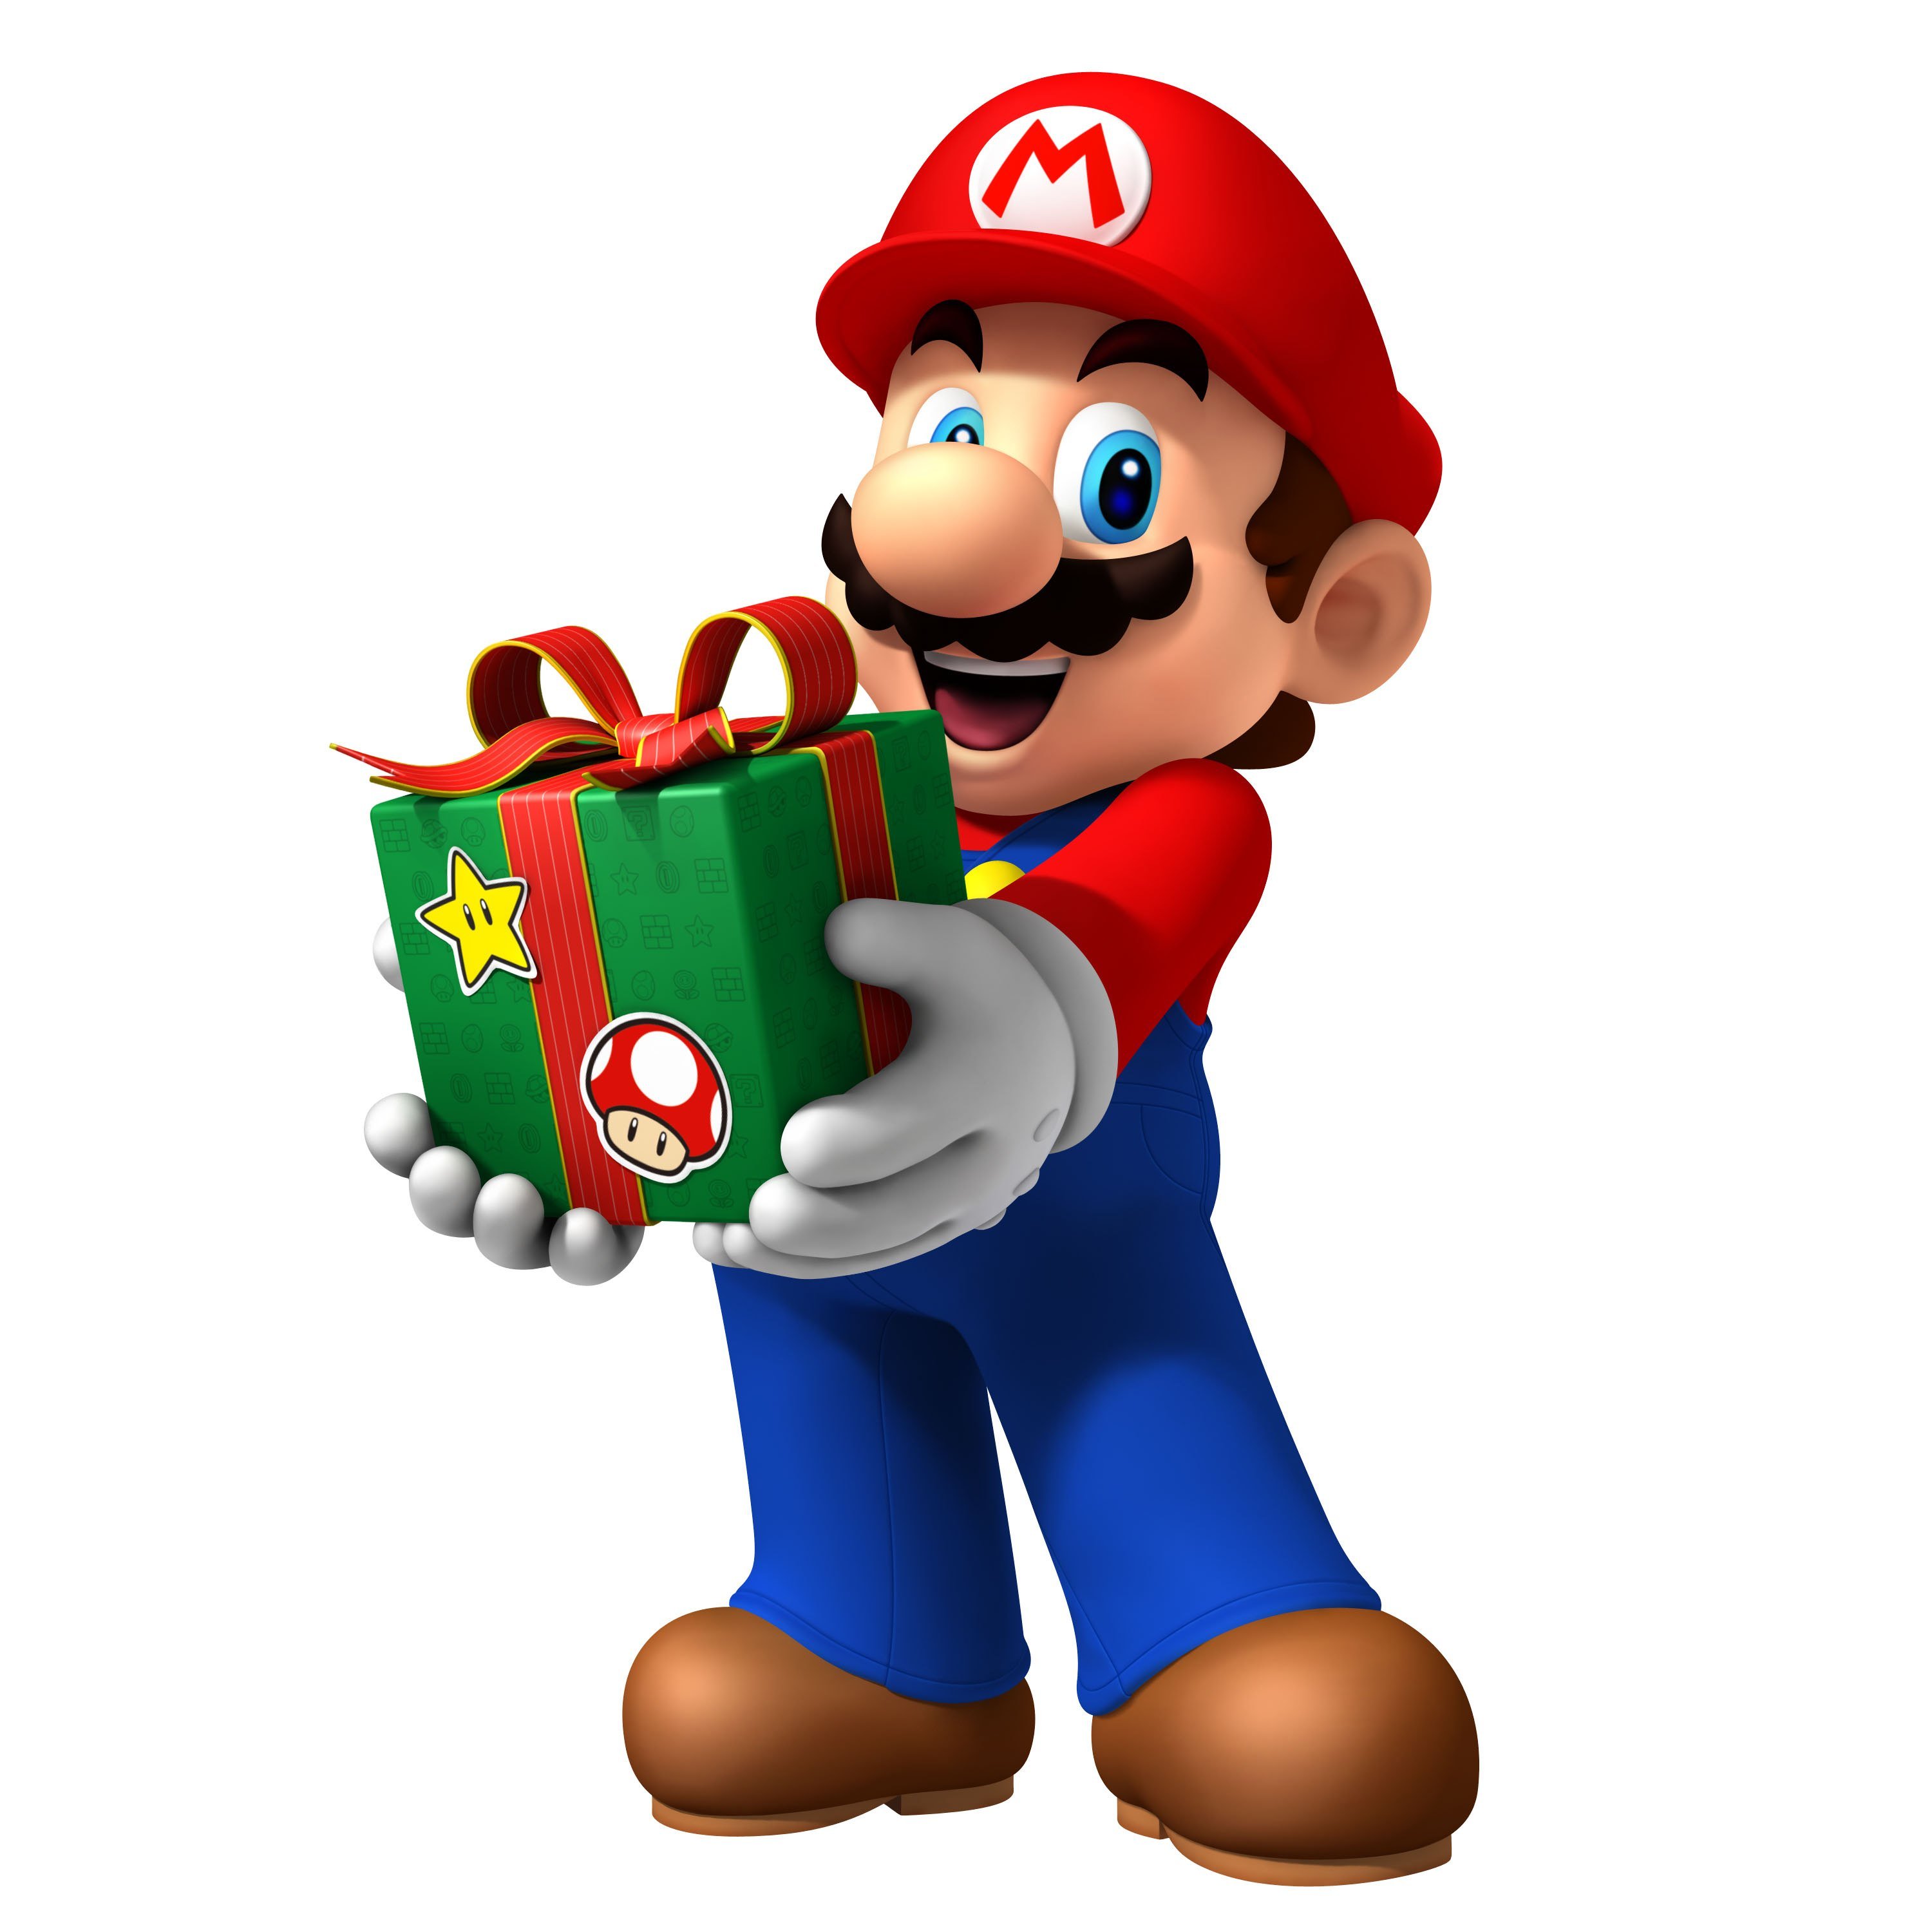 Mario bros 5. Super Mario 3d Land Луиджи. Марио с Луиджи 3д. Марио и Луиджи Рождество. Марио (персонаж игр).